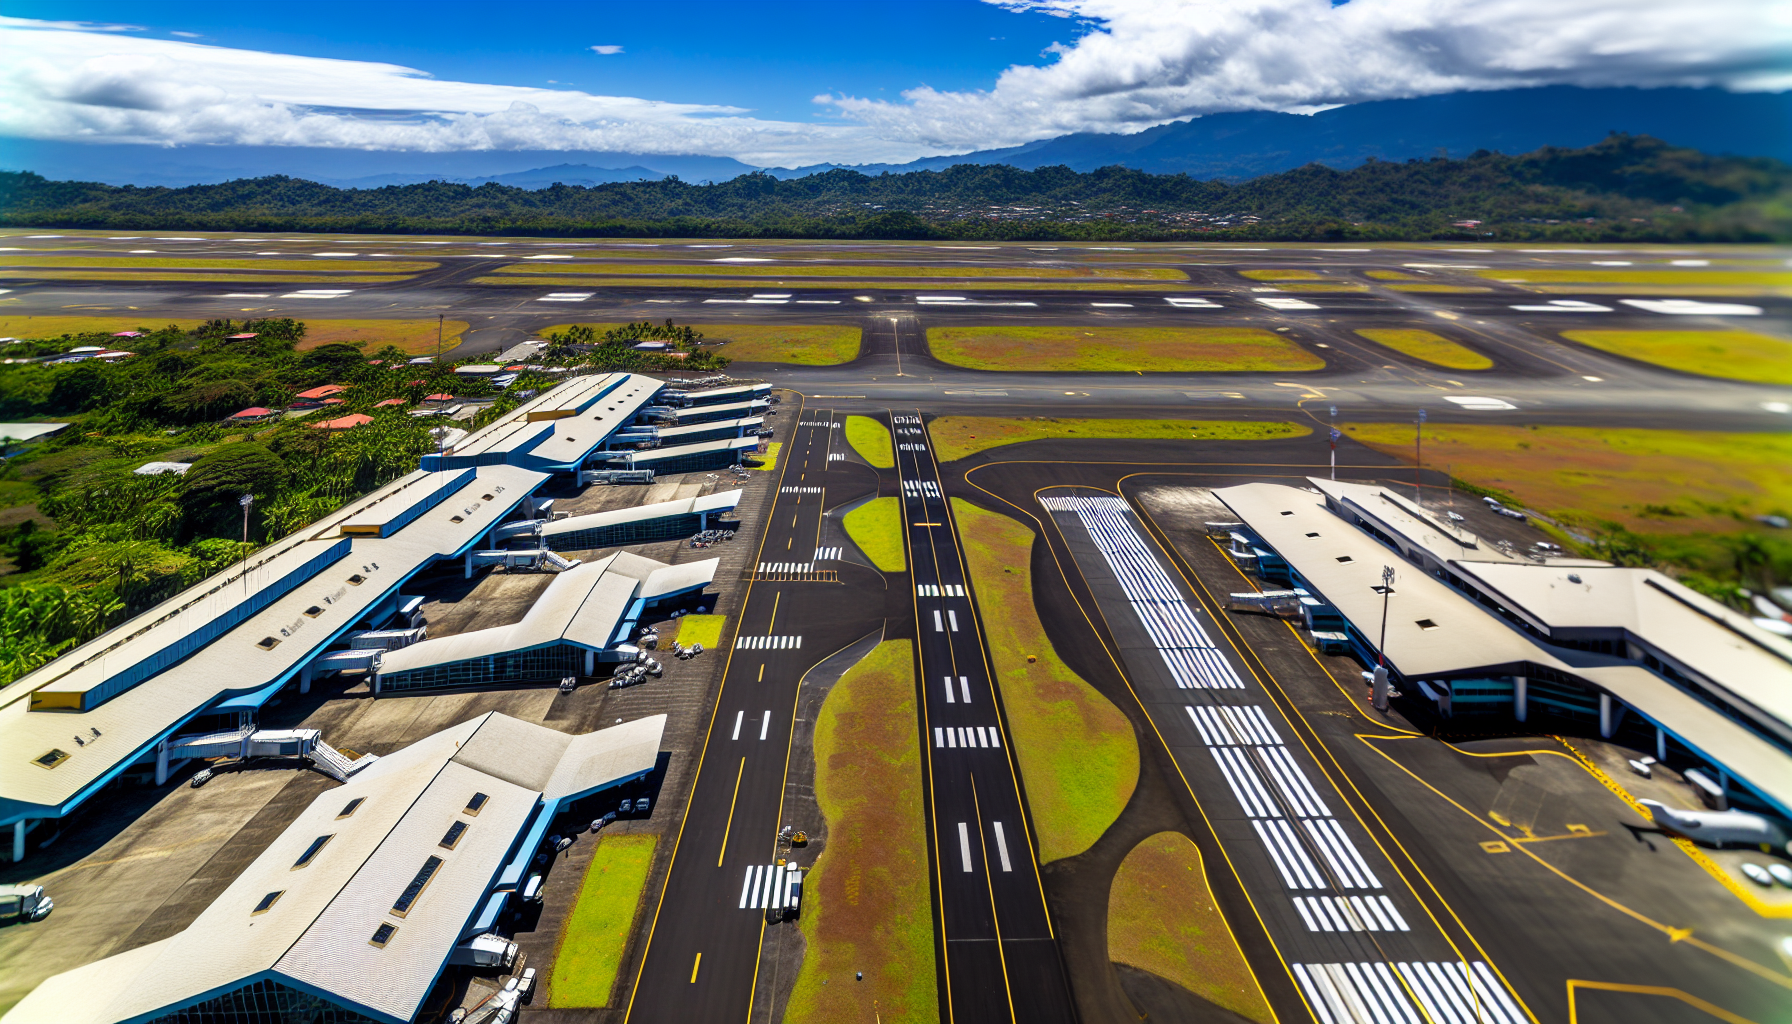 Aerial view of Juan Santamaría International Airport